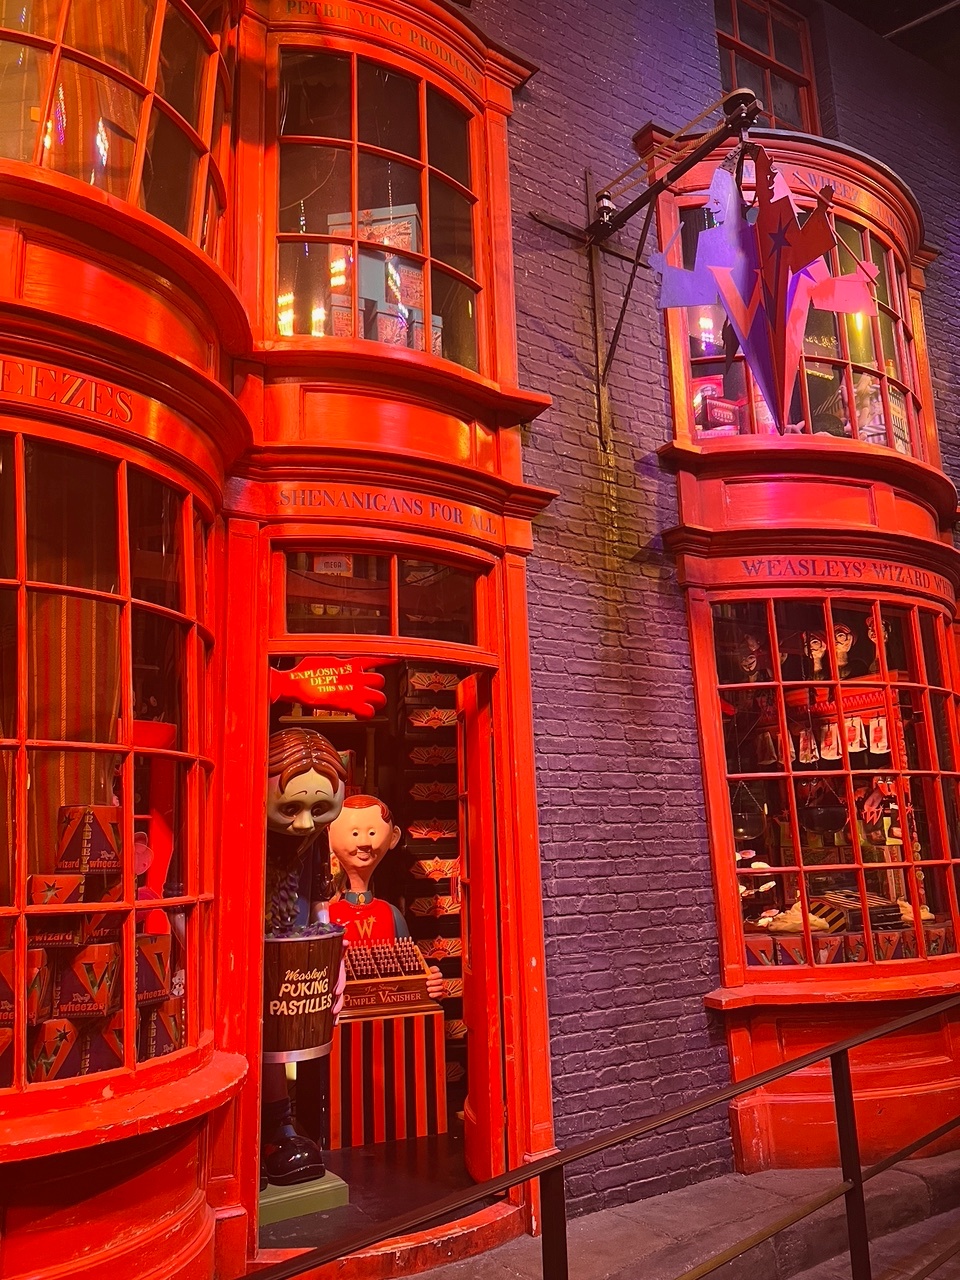 Warner Bros. Studios London: The Making of Harry Potter